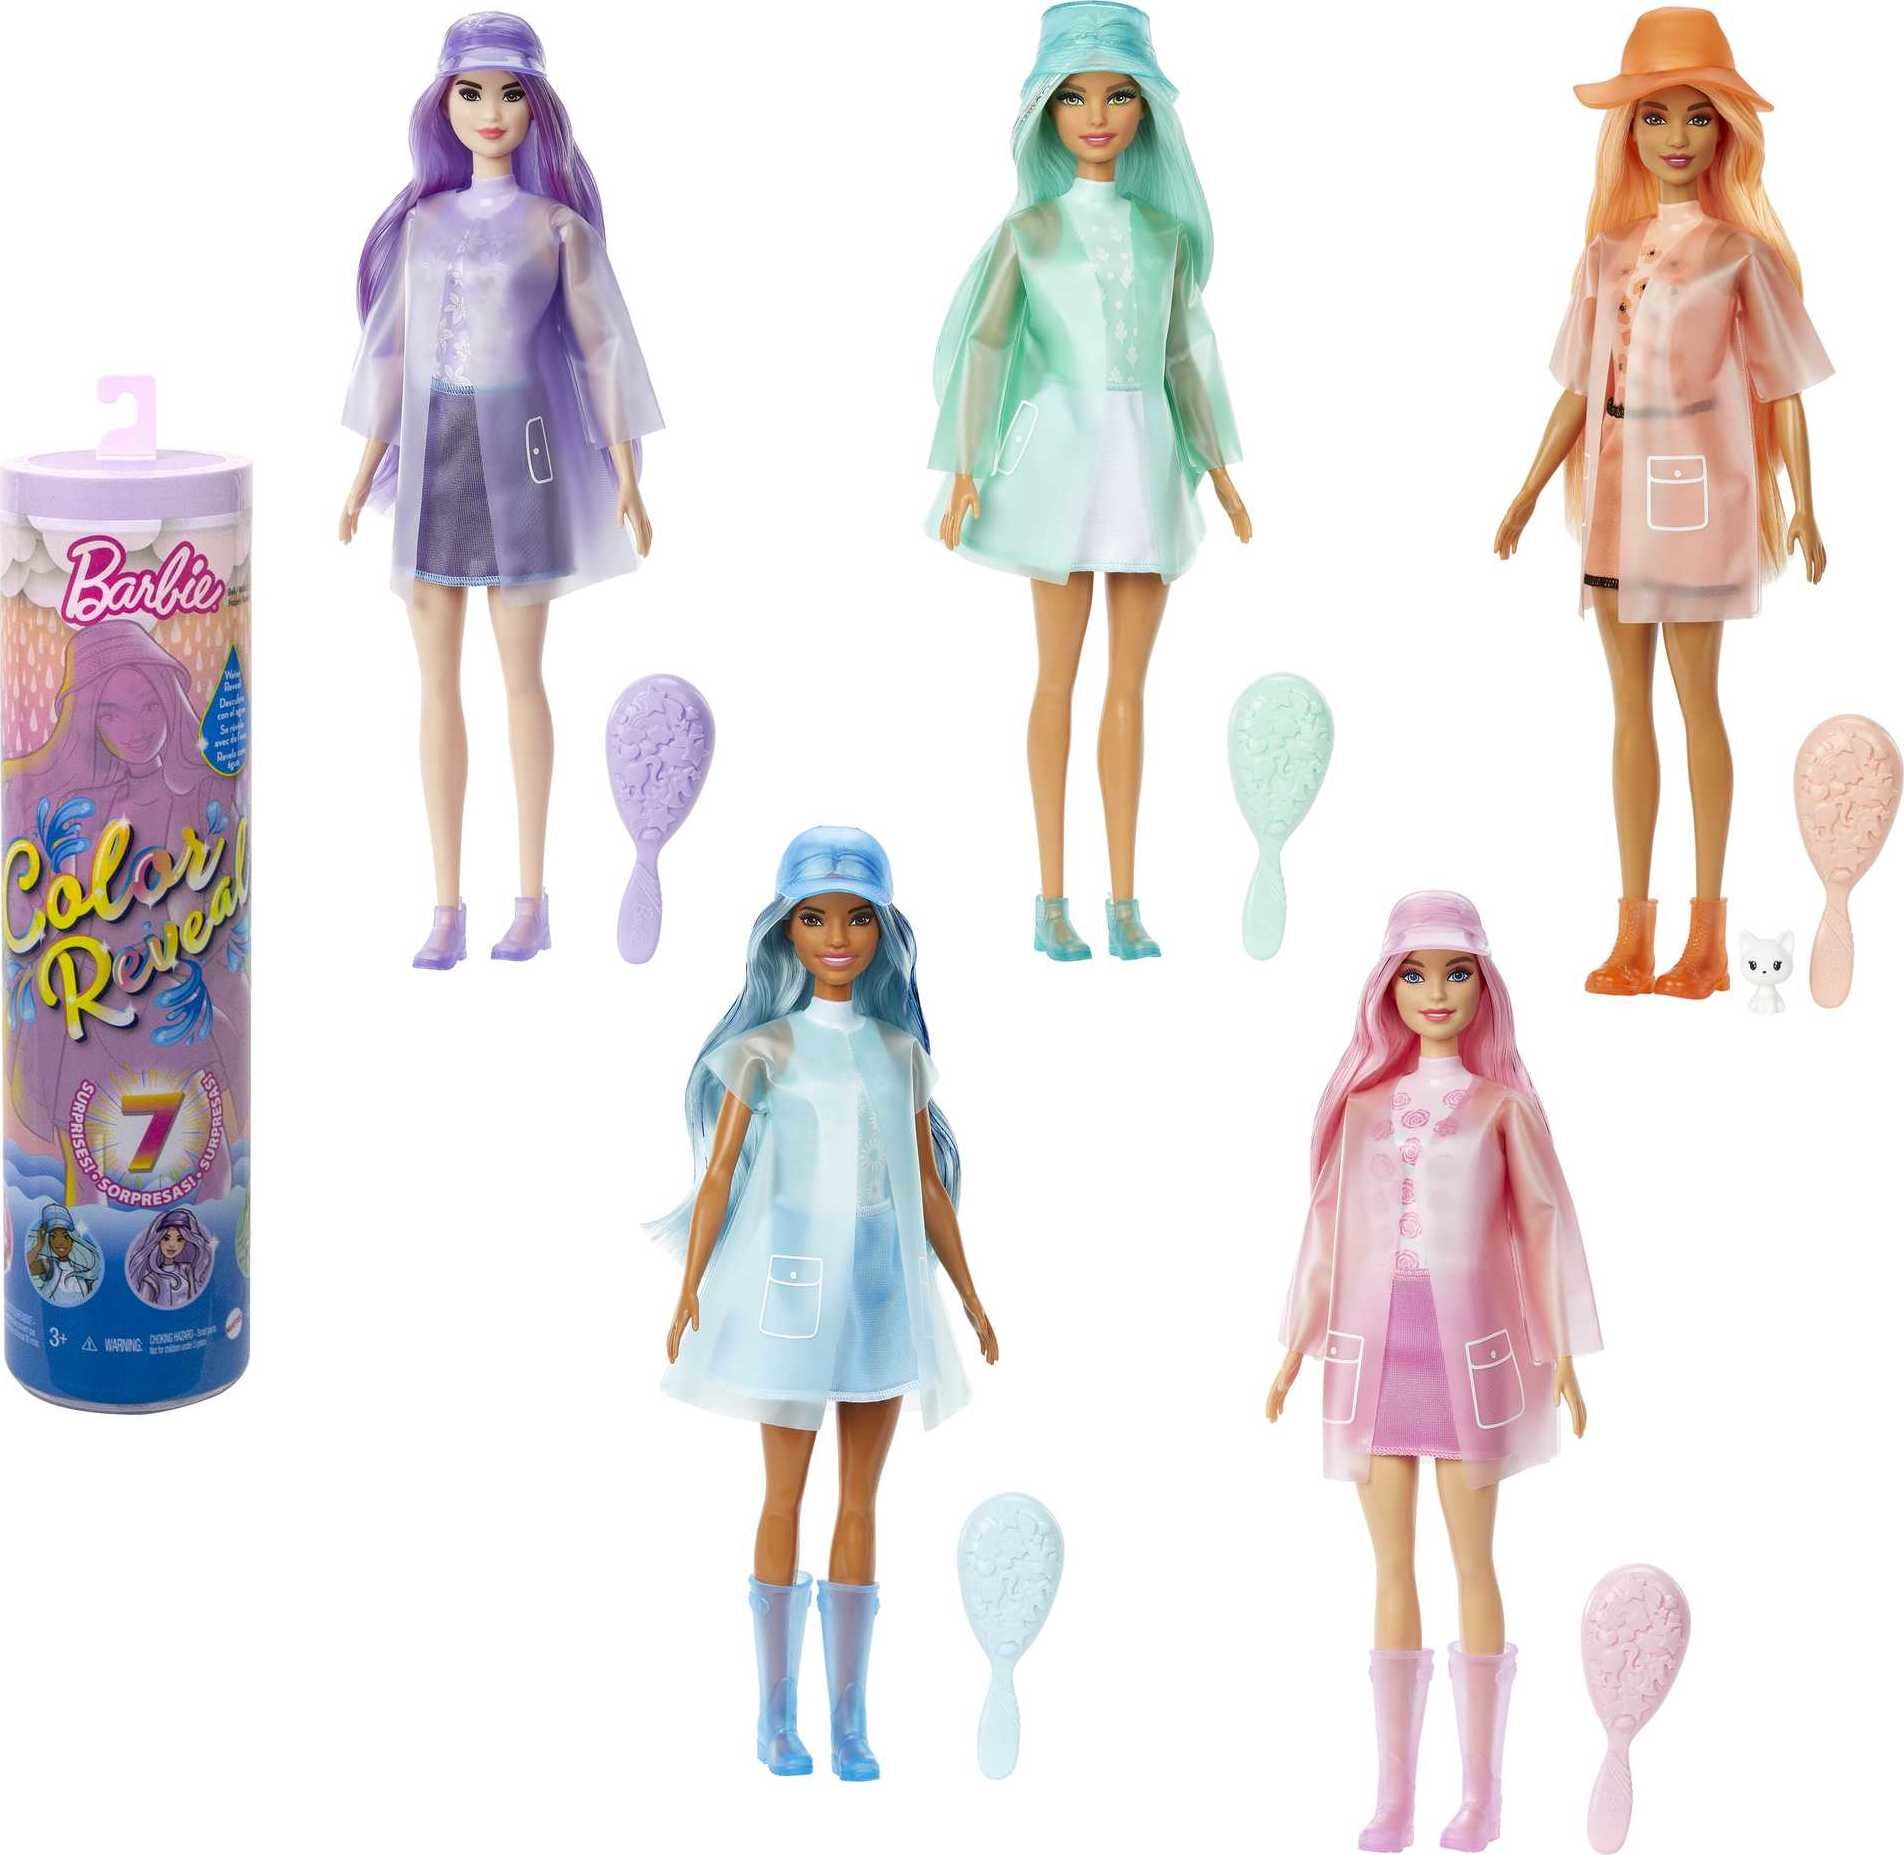 Barbie Doll Color Sunshine and Series Toys for Kids - Walmart.com